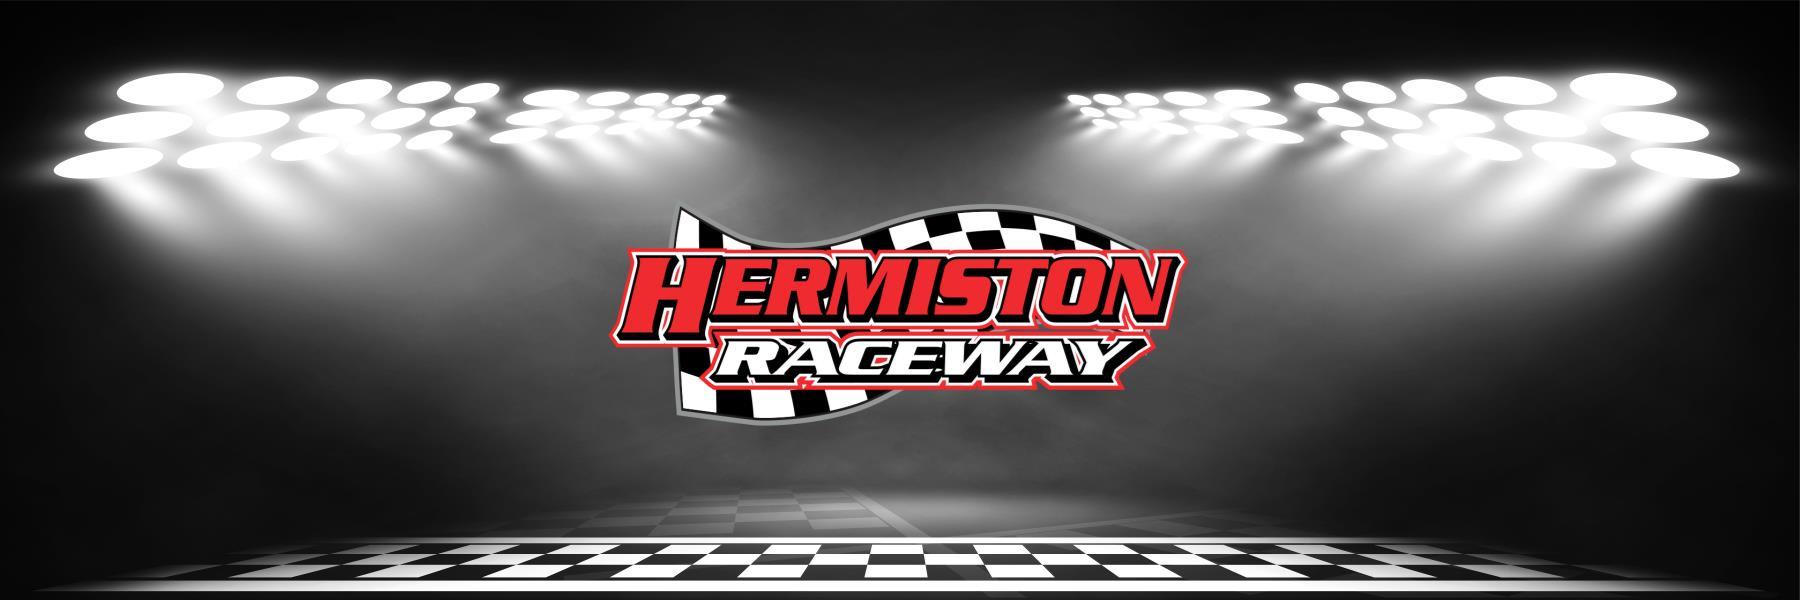 5/18/2019 - Hermiston Raceway